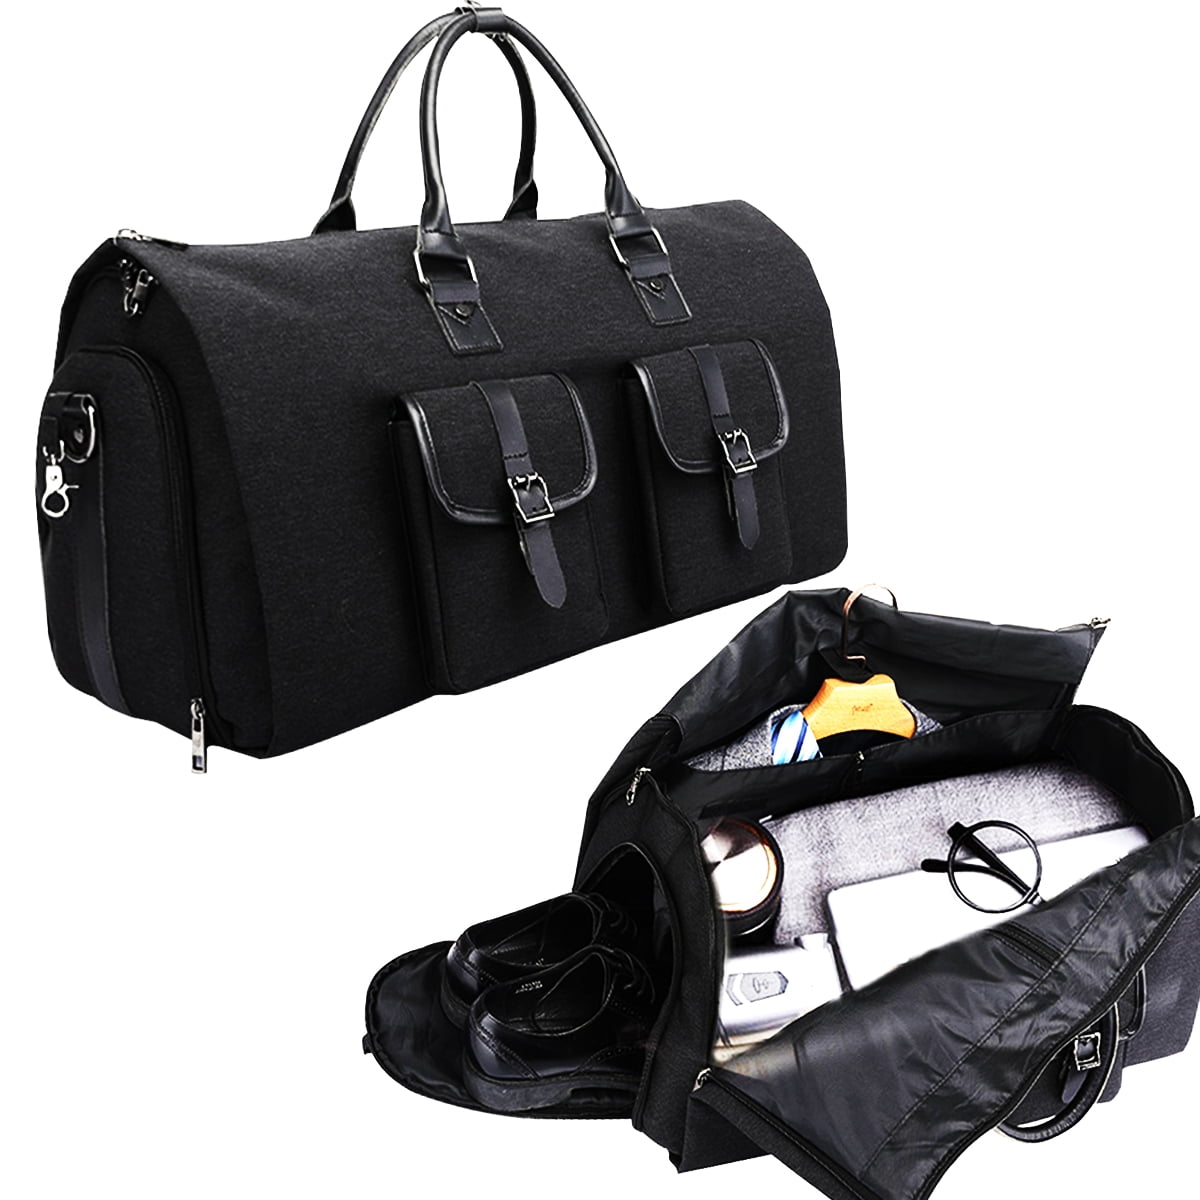 Suit Bag Garment Bag for Travel for Men Women 2-in-1 Suit Case